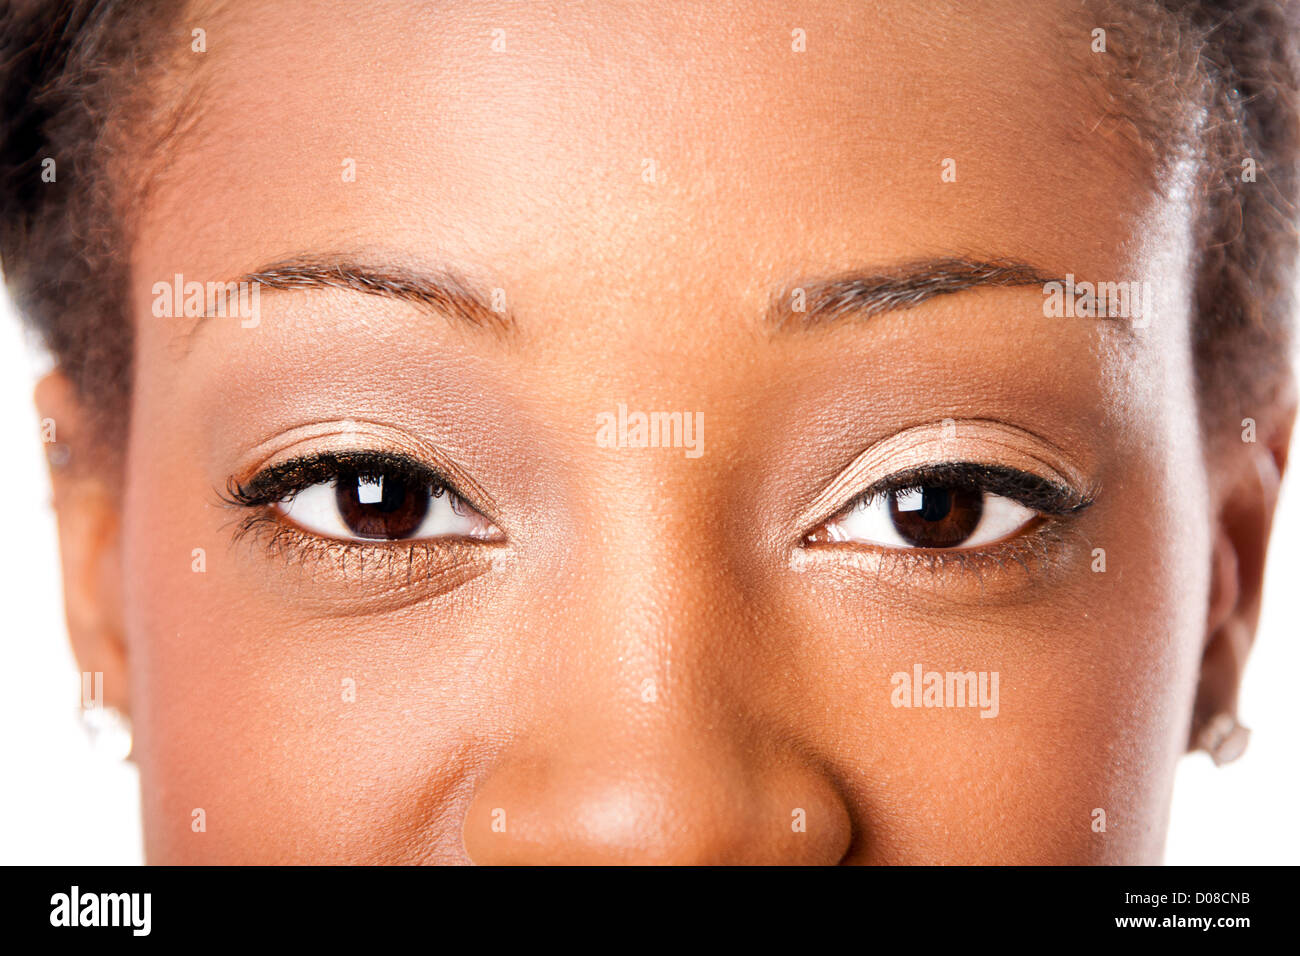 african eye shape